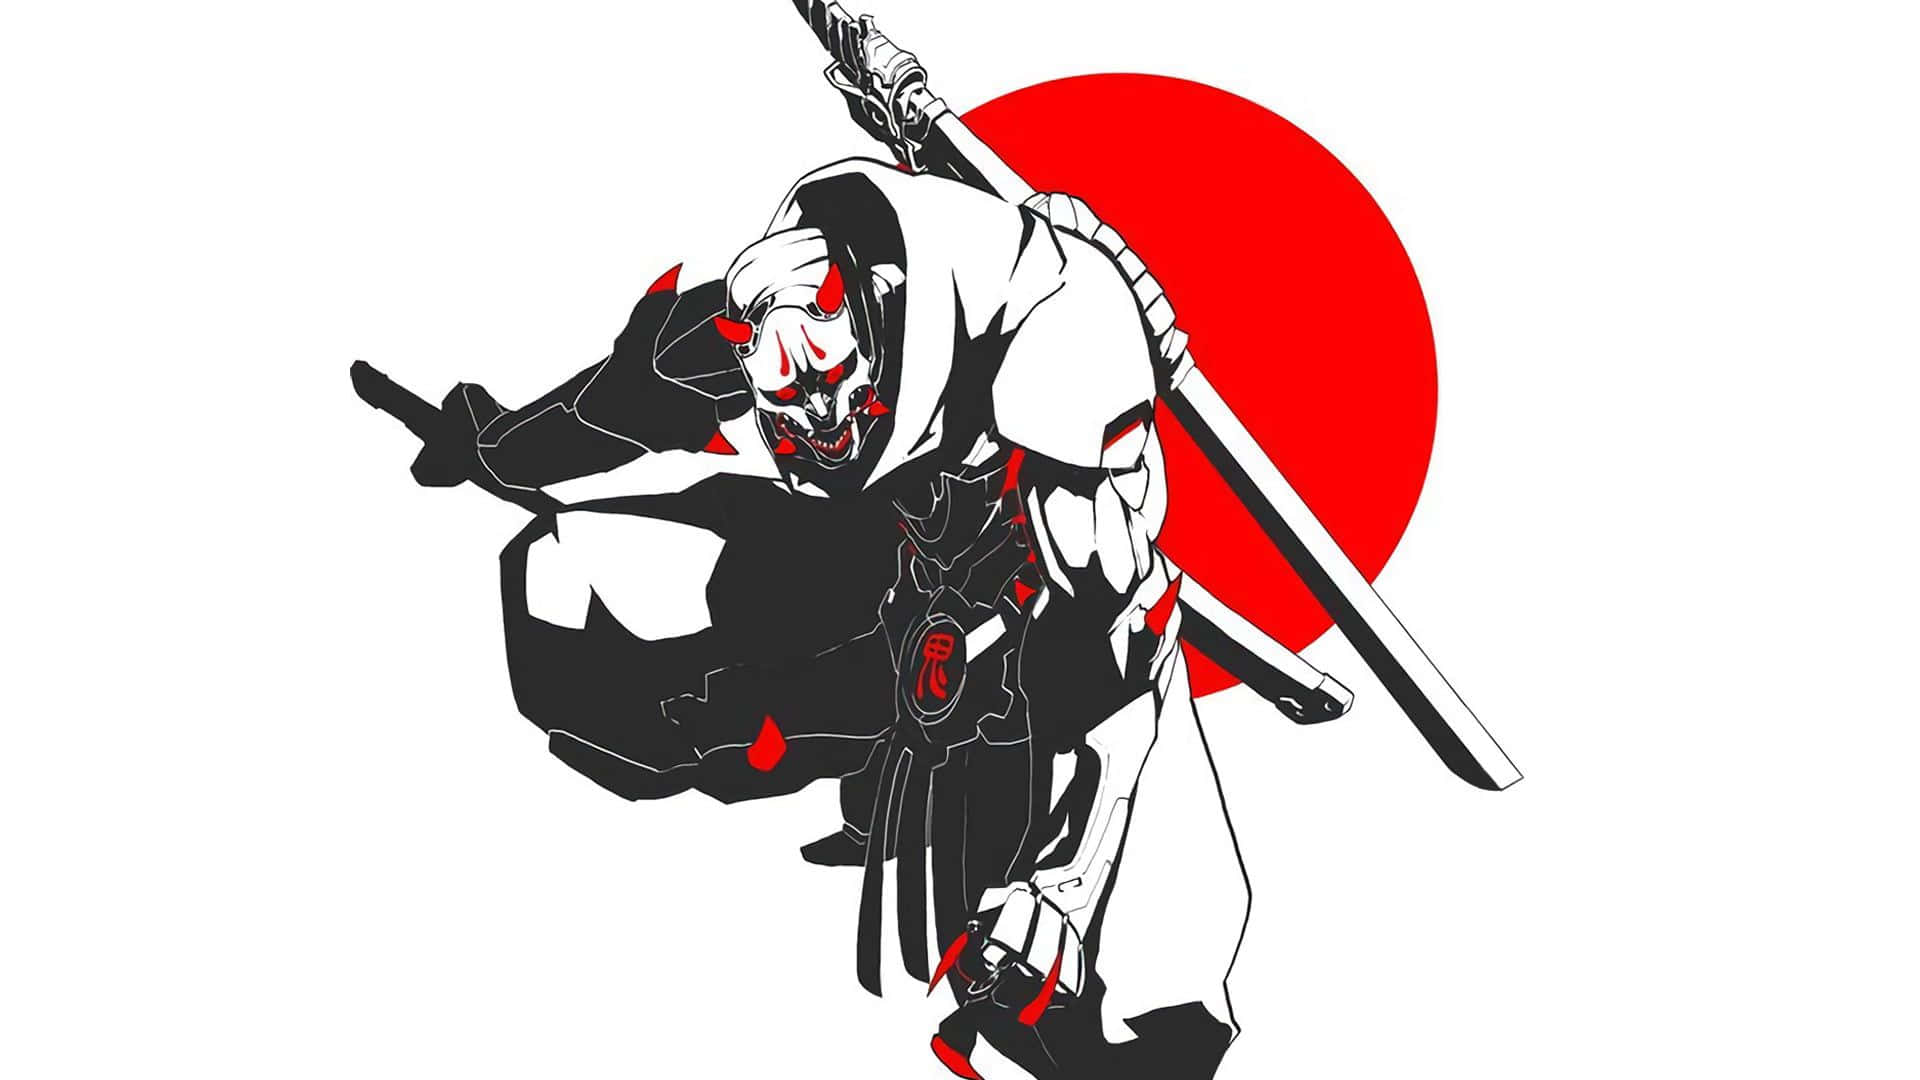 Black and White Samurai Warrior in Intense Stance Wallpaper